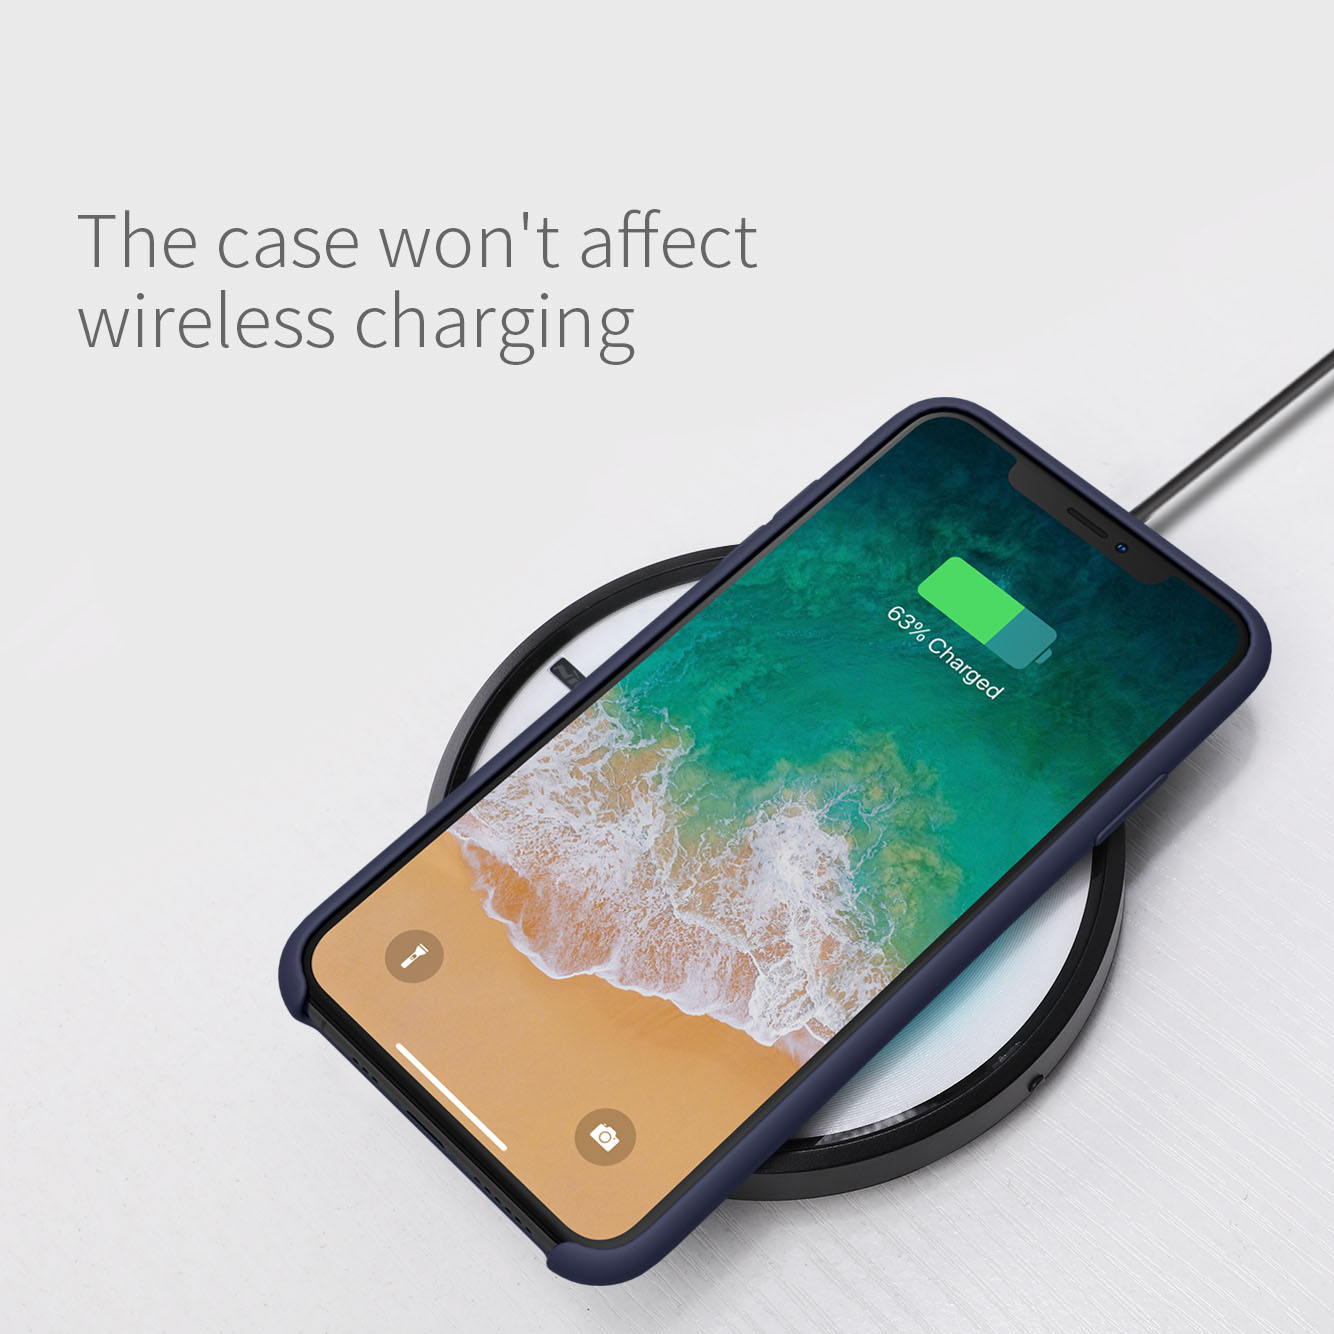 iPhone XS case